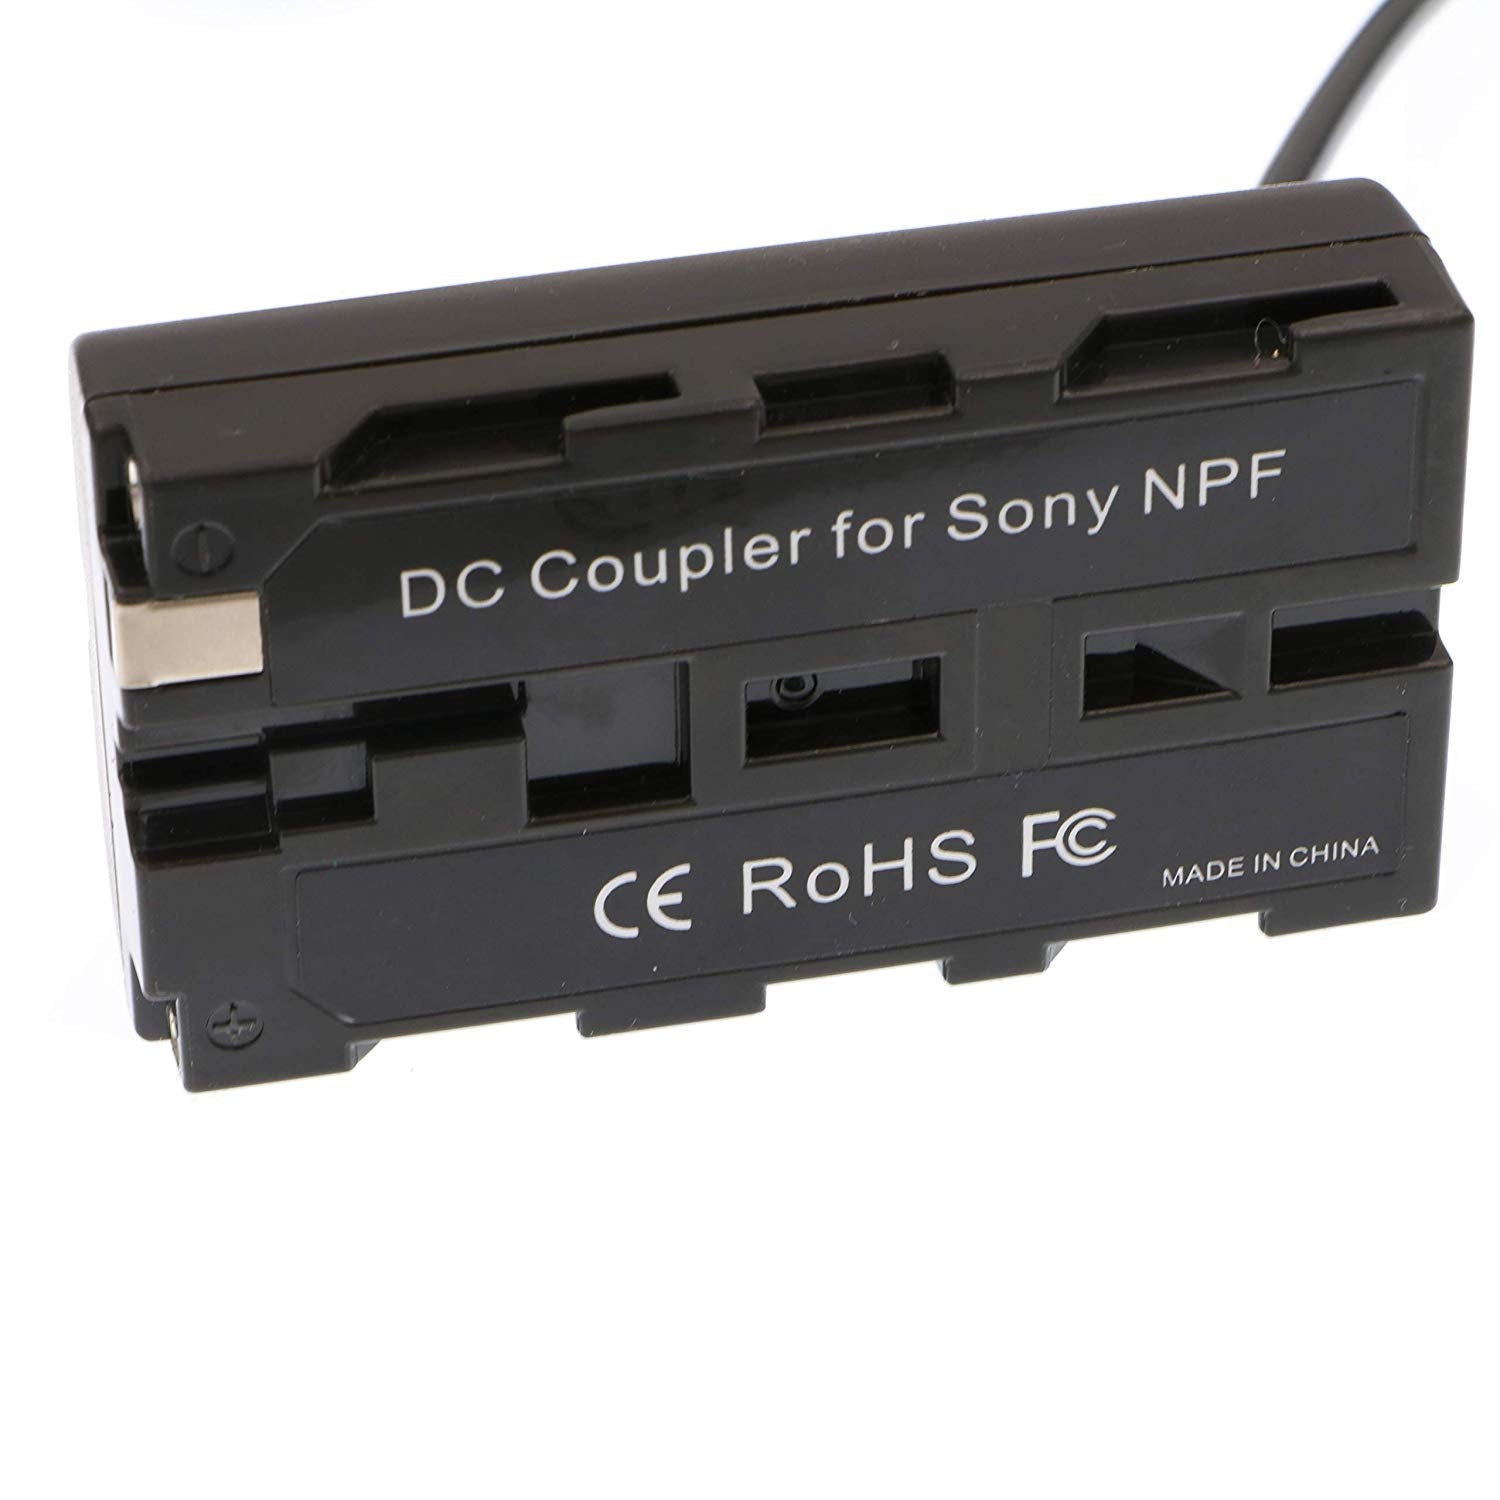 Alvin's Cables NP F550 Dummy Battery to D-Tap Spiralkabel für Sony NP F570 NP F970 Atomos Shinobi Atomos Ninja Monitor SmallHD Focus 7